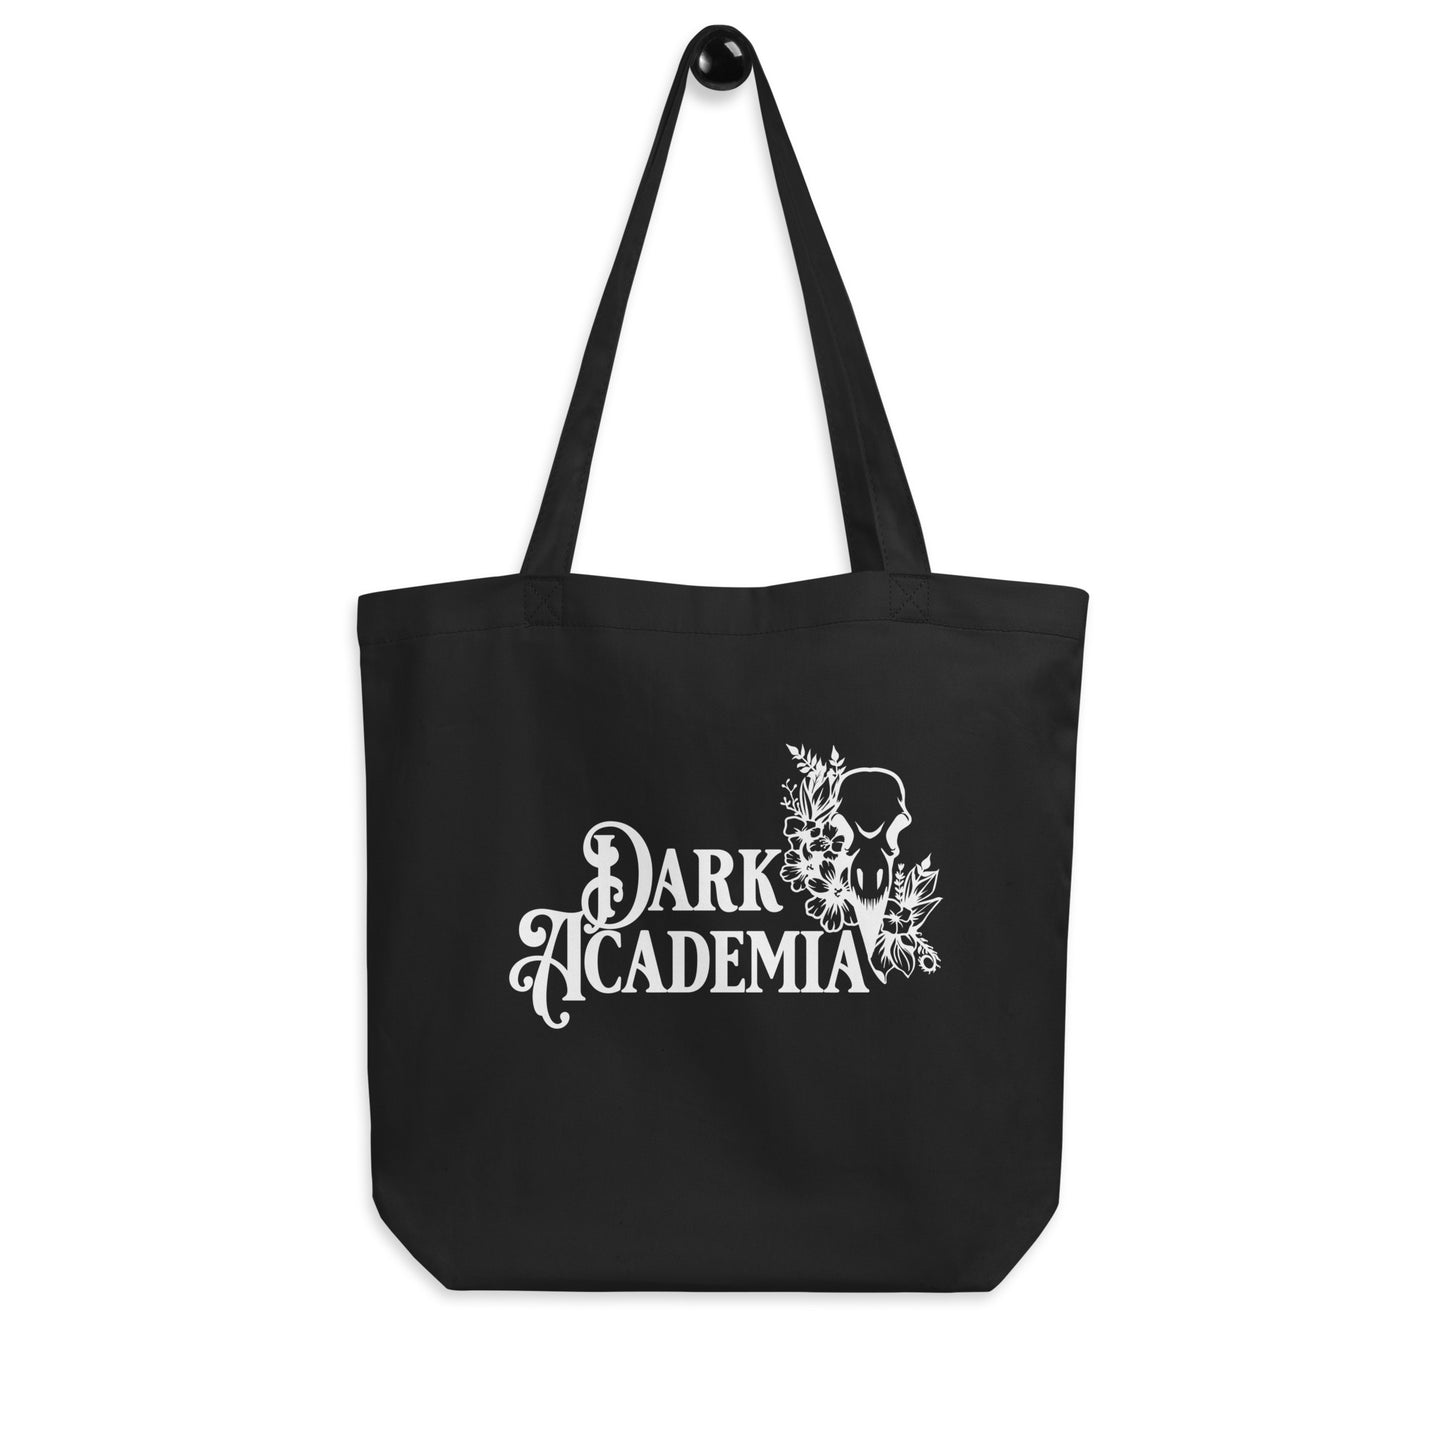 Dark Academia Eco Tote Bag for FireDrake Artistry